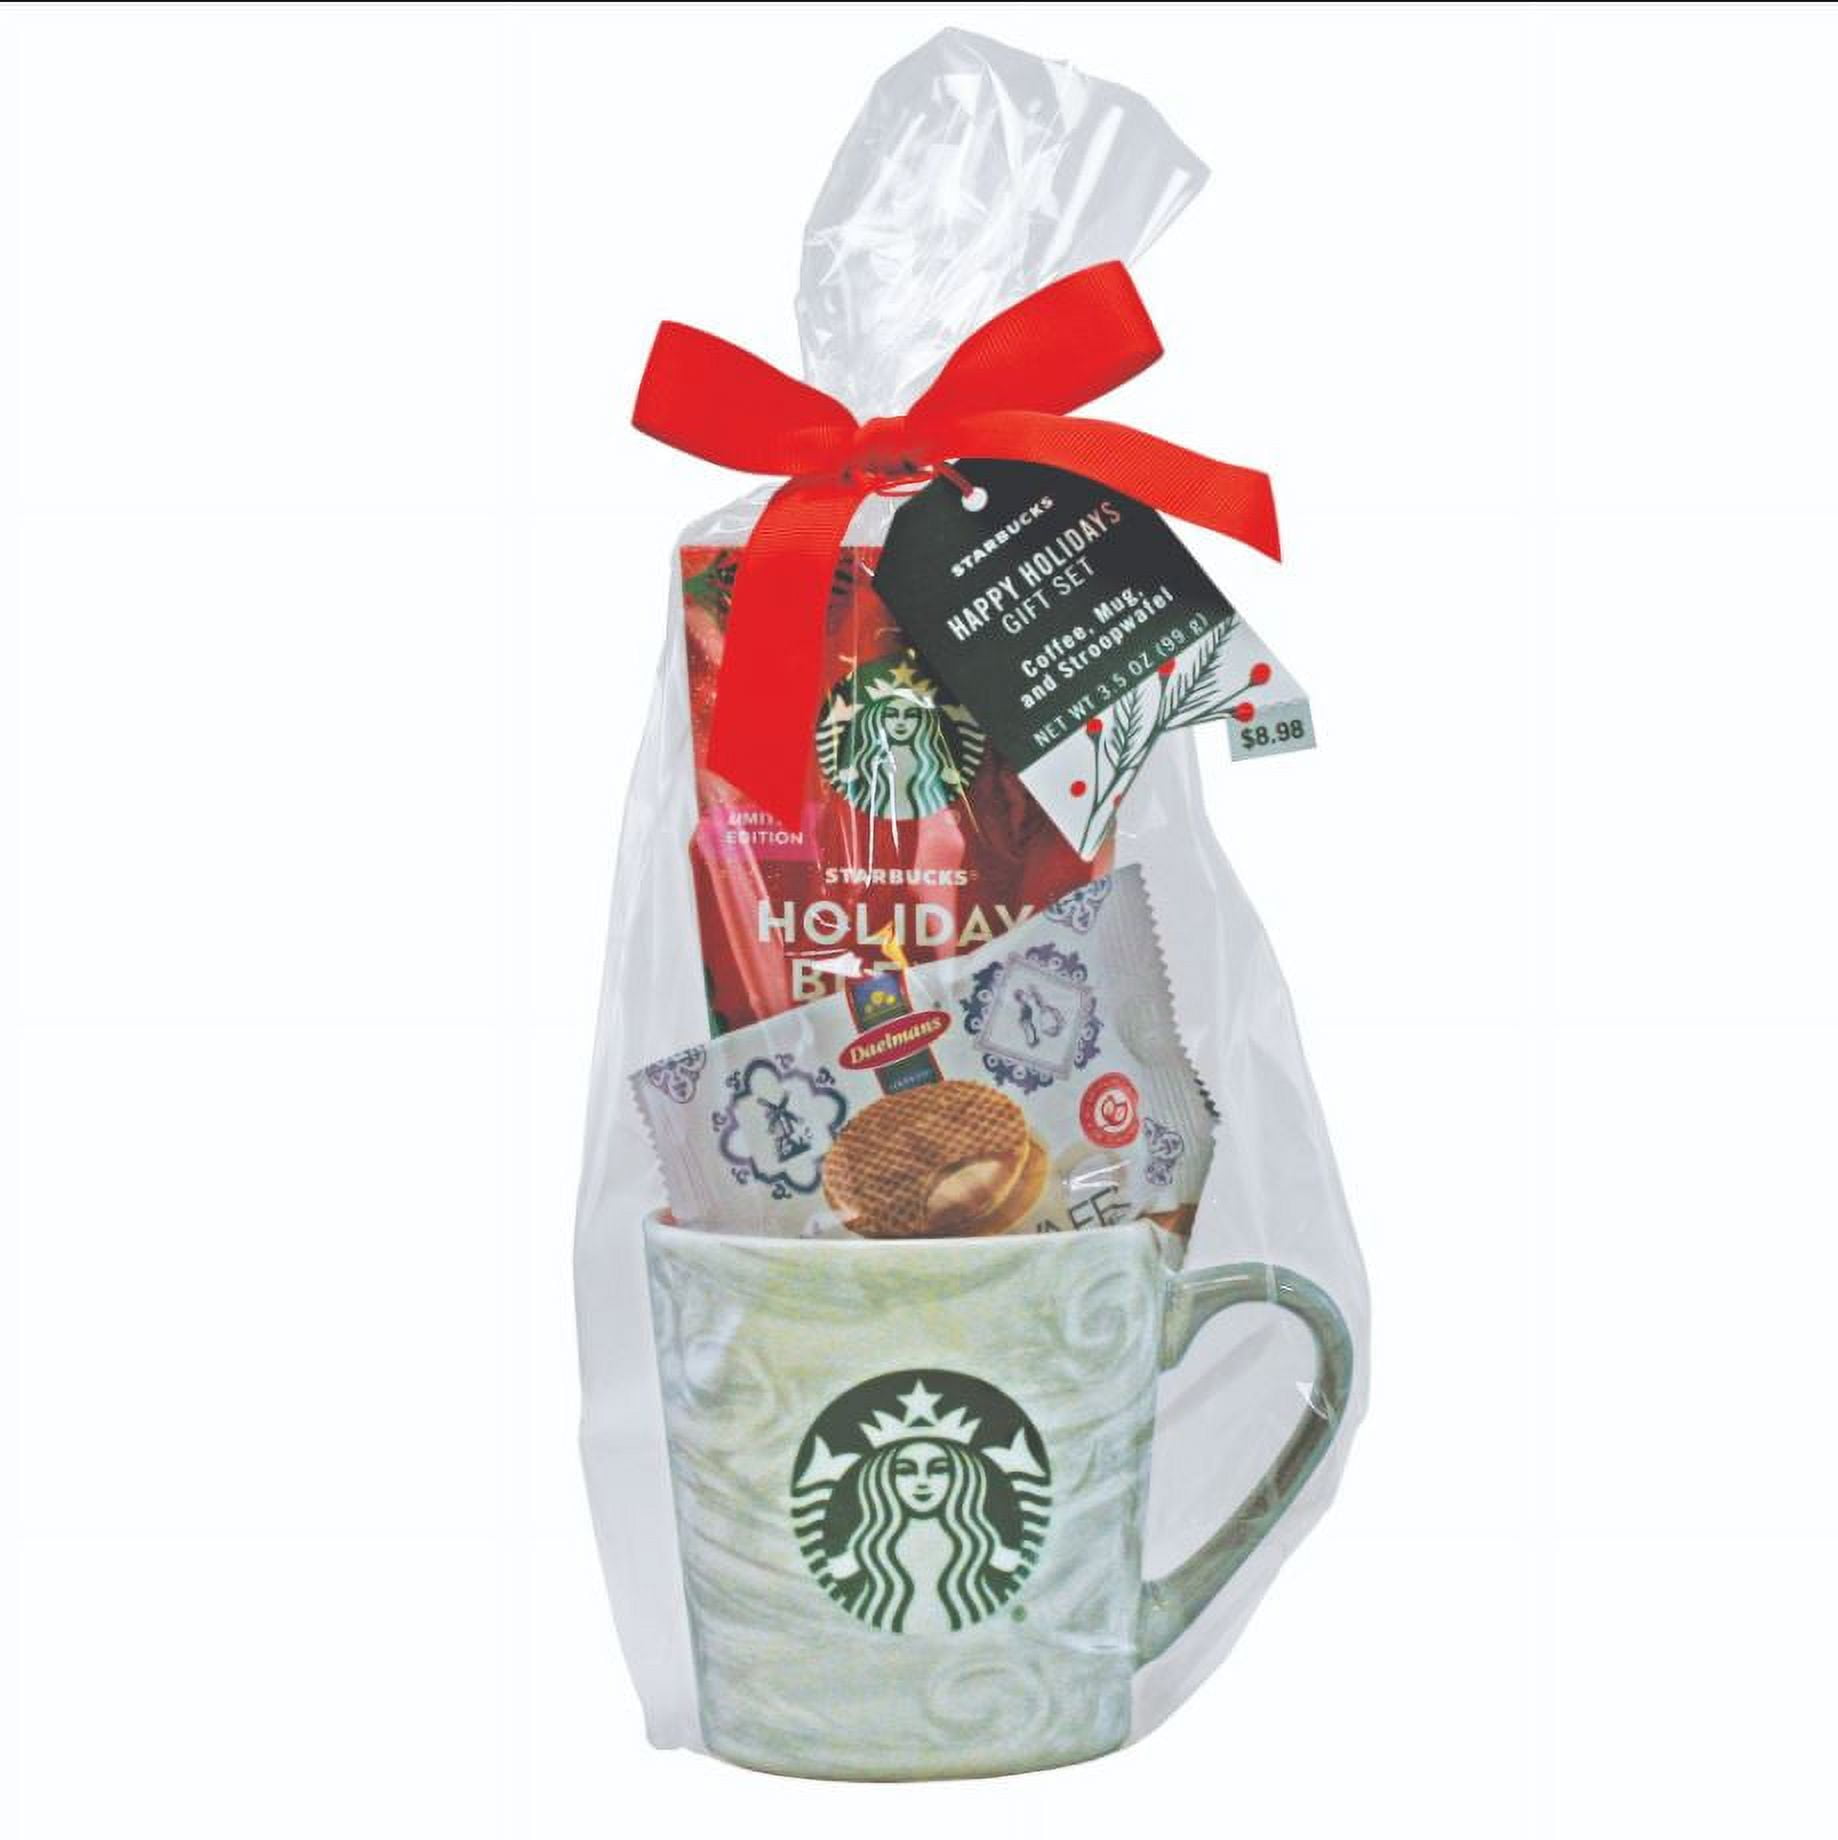 Starbucks Mug Gift